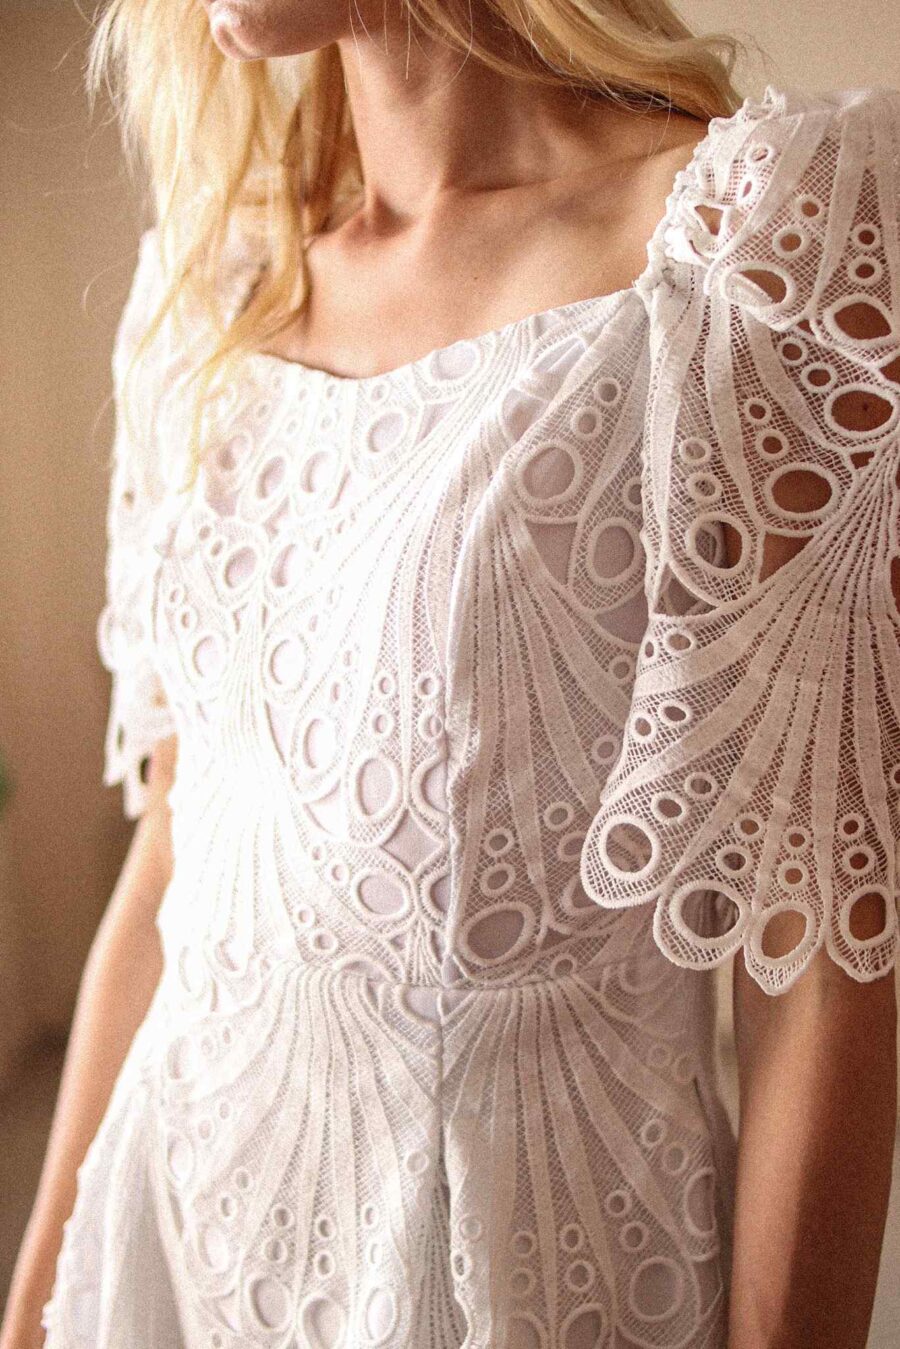 Betonica Hirsuta - biała, giupiurowa sukienka